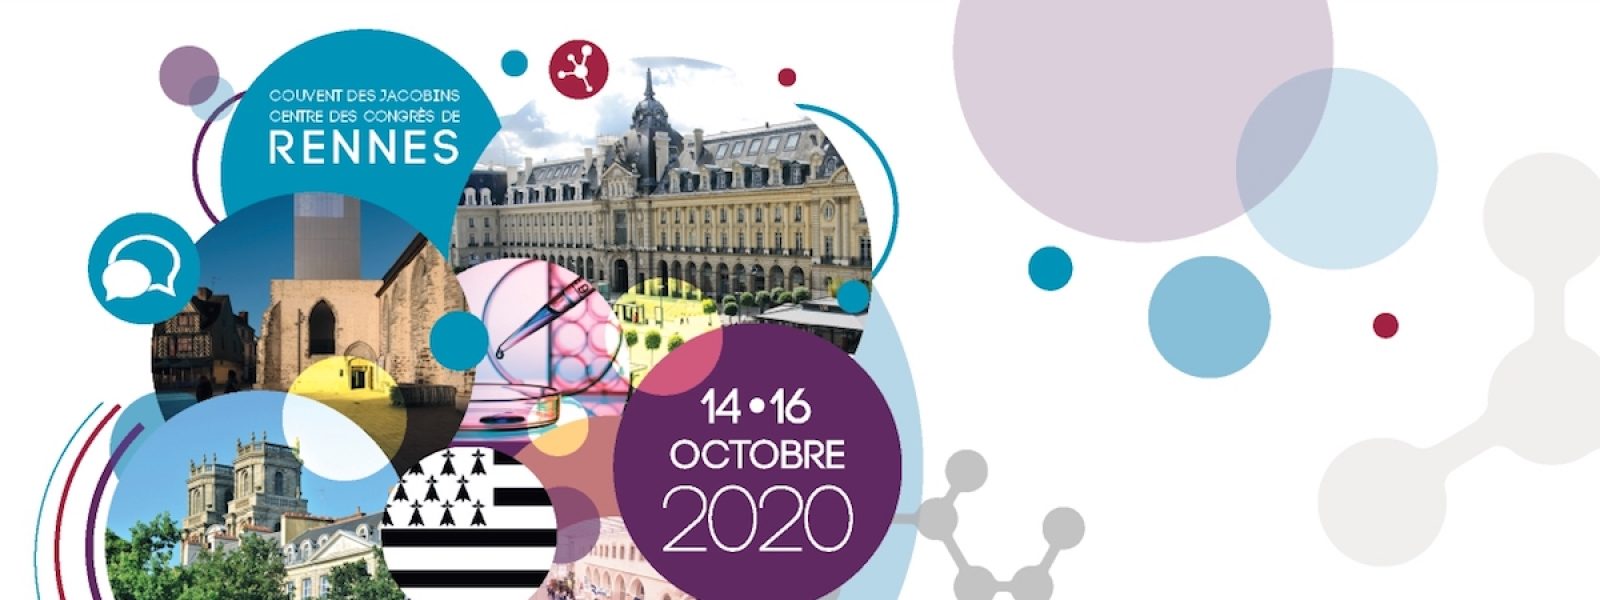 JFBM - Biologie médicale 2020 - Rennes